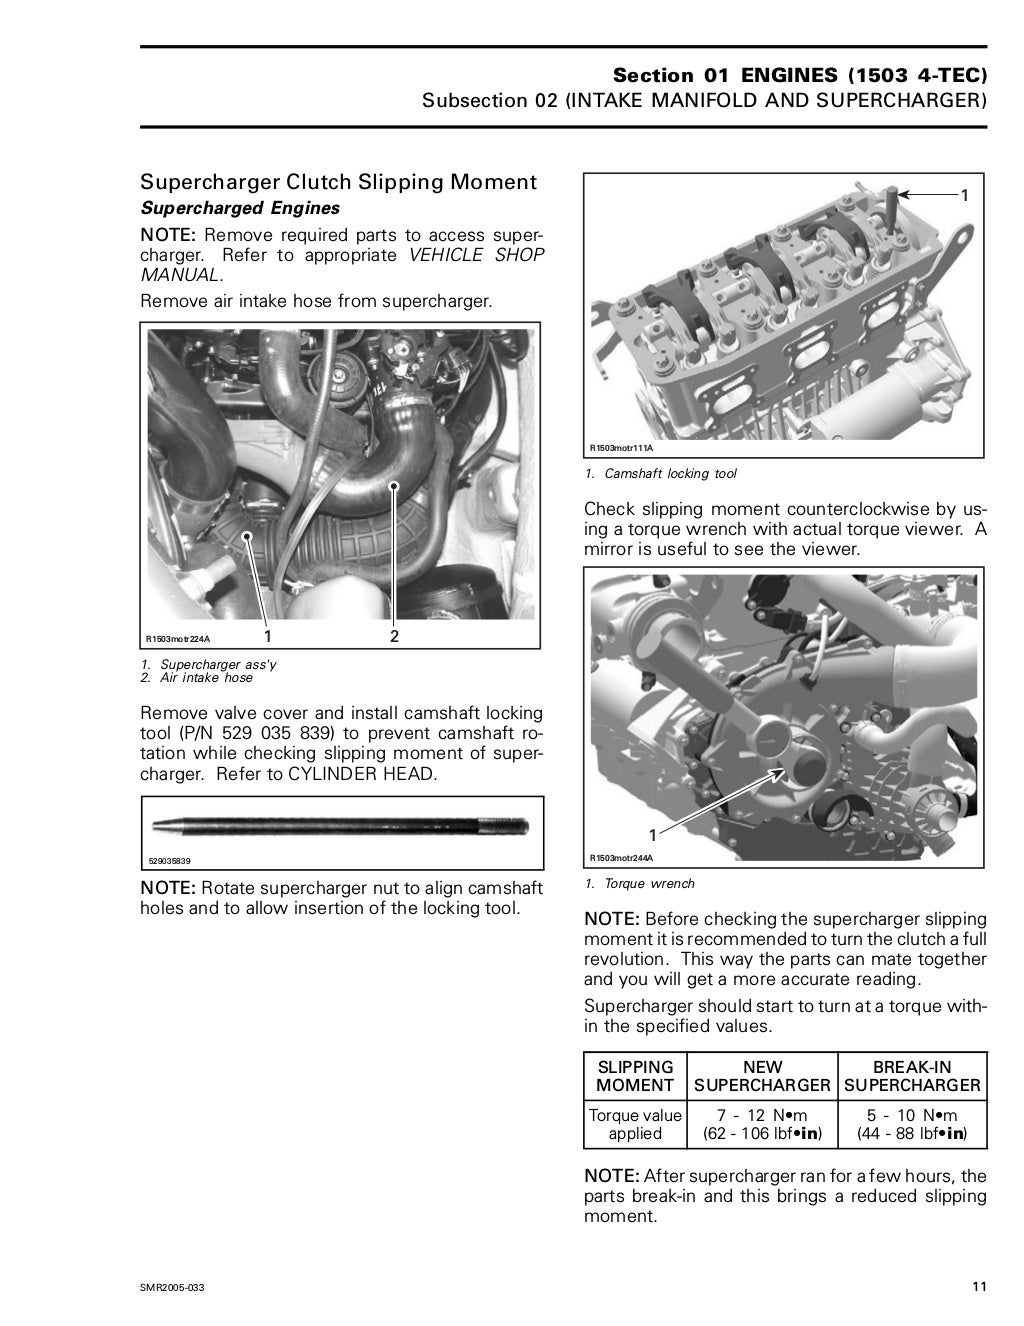 2005 Sea Doo Rotax 1503 4-Tec Engine Service Repair Manual